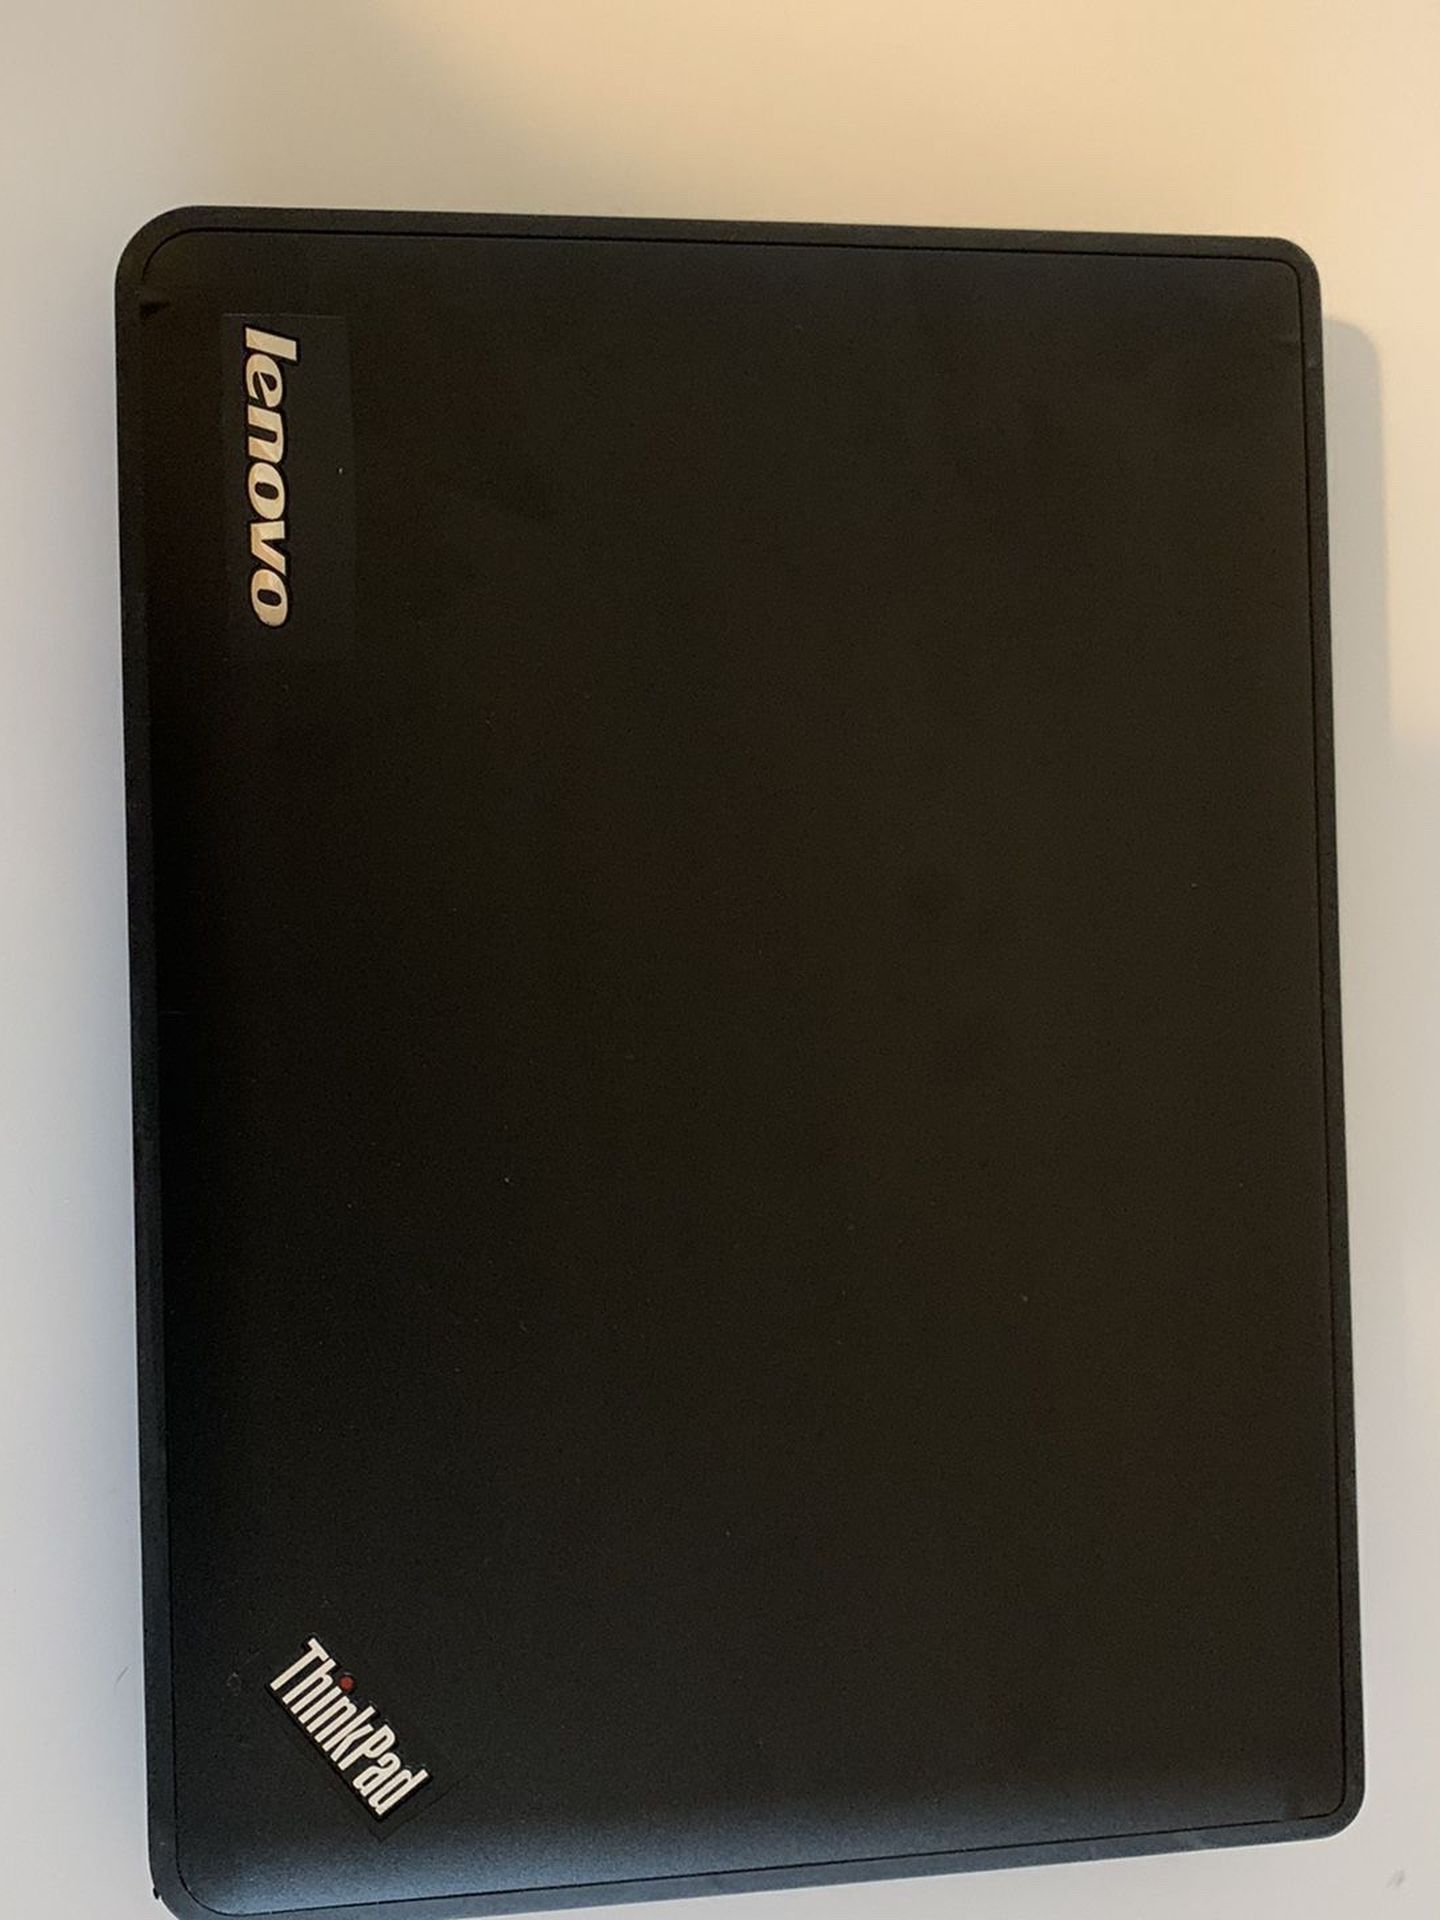 Lenovo Diesel diagnostic laptop